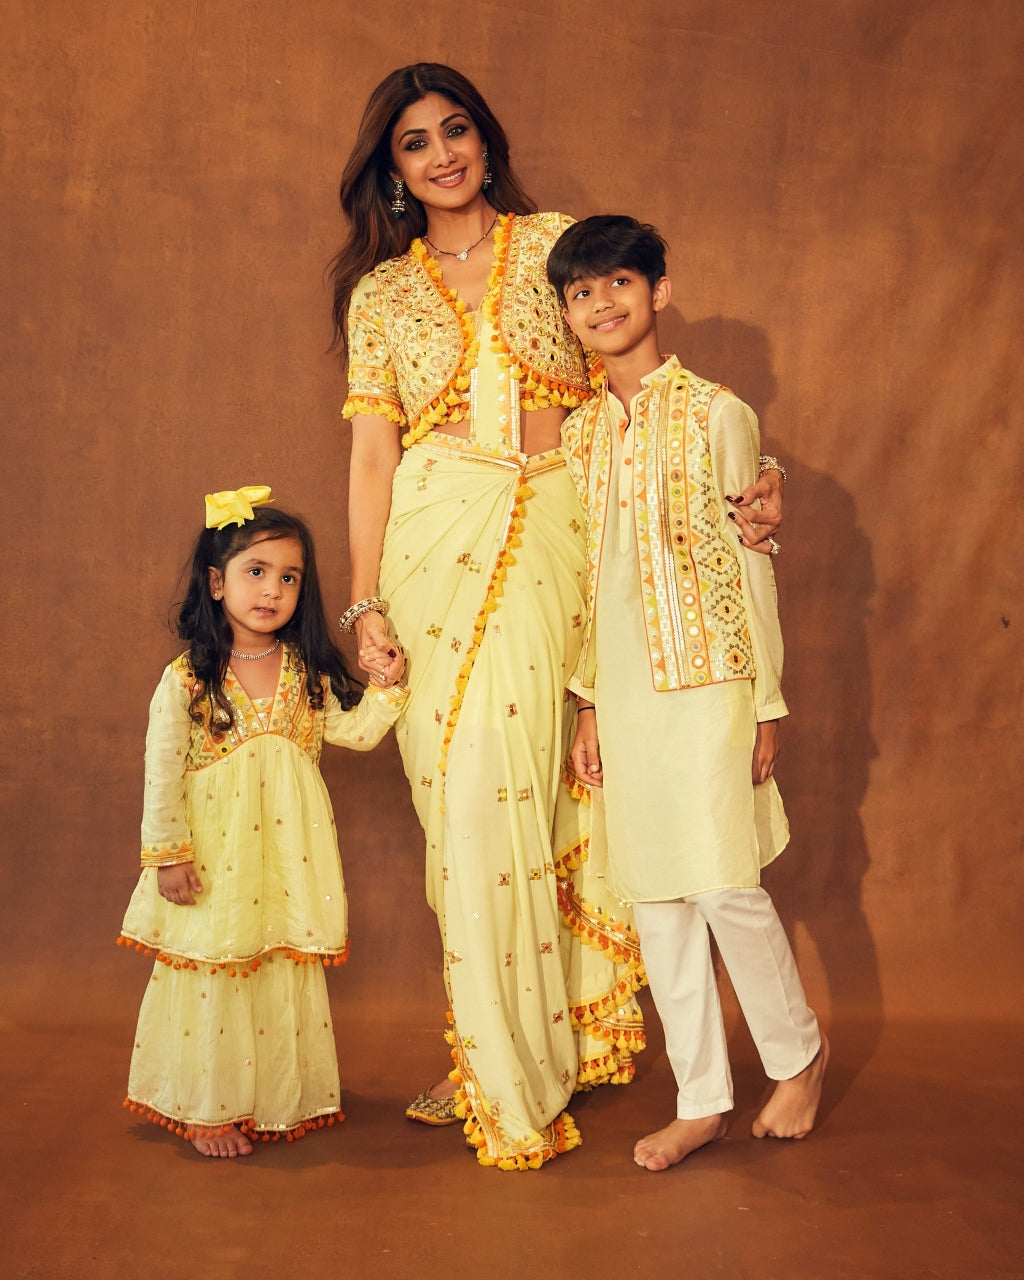 5 times Shilpa Shetty gave us serious saree goals – Fashion fun India